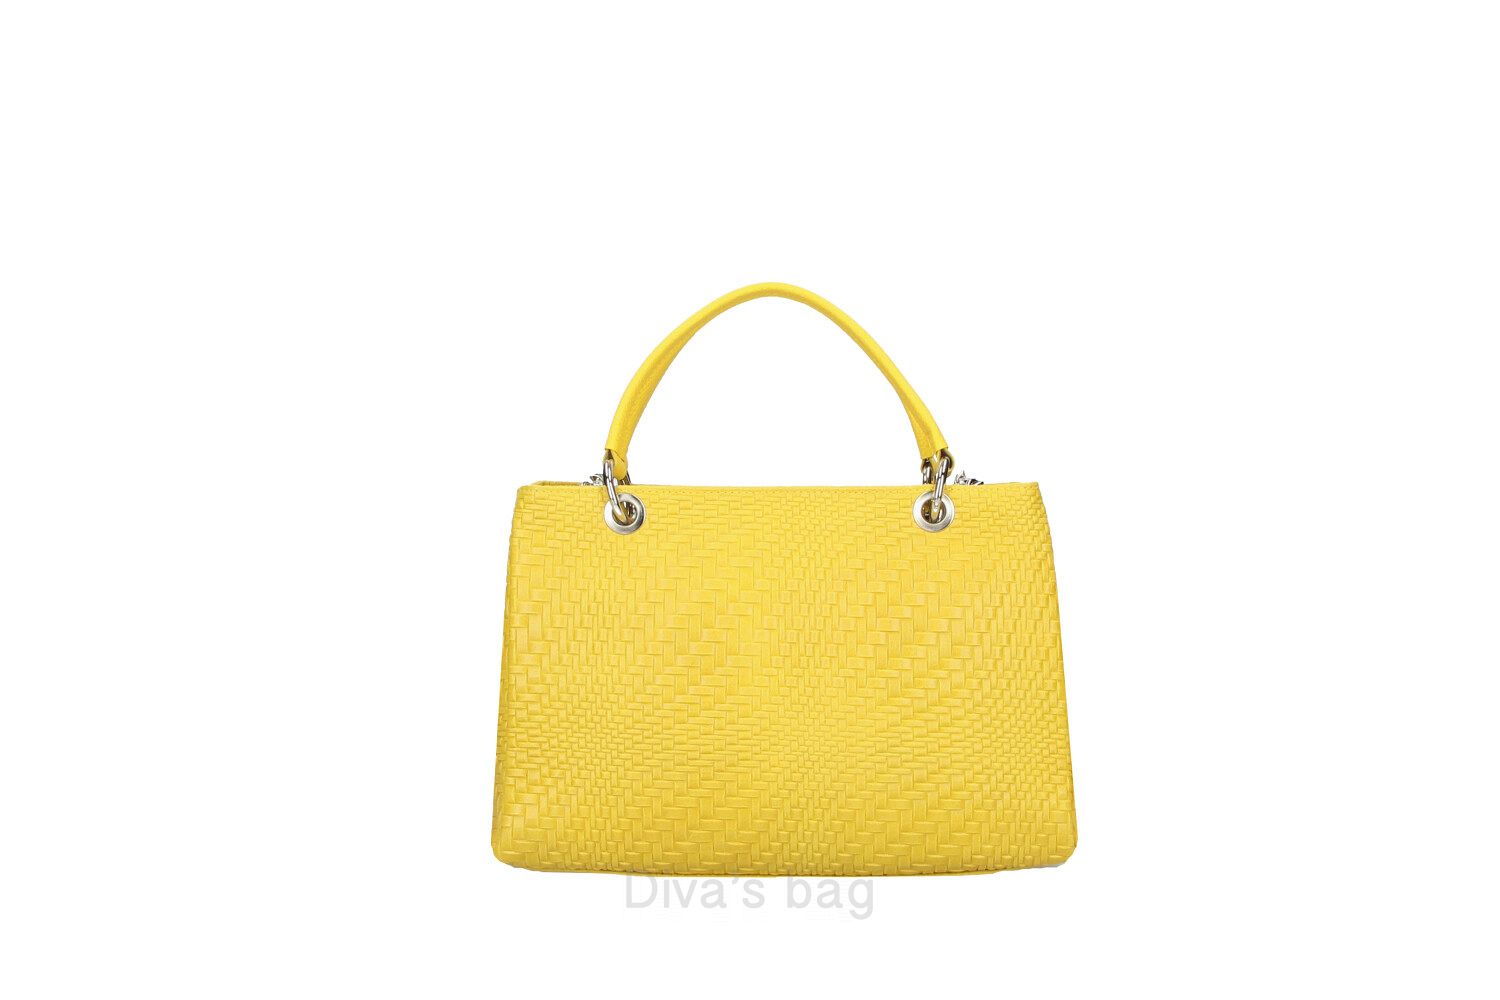 Judith - Leather handbag